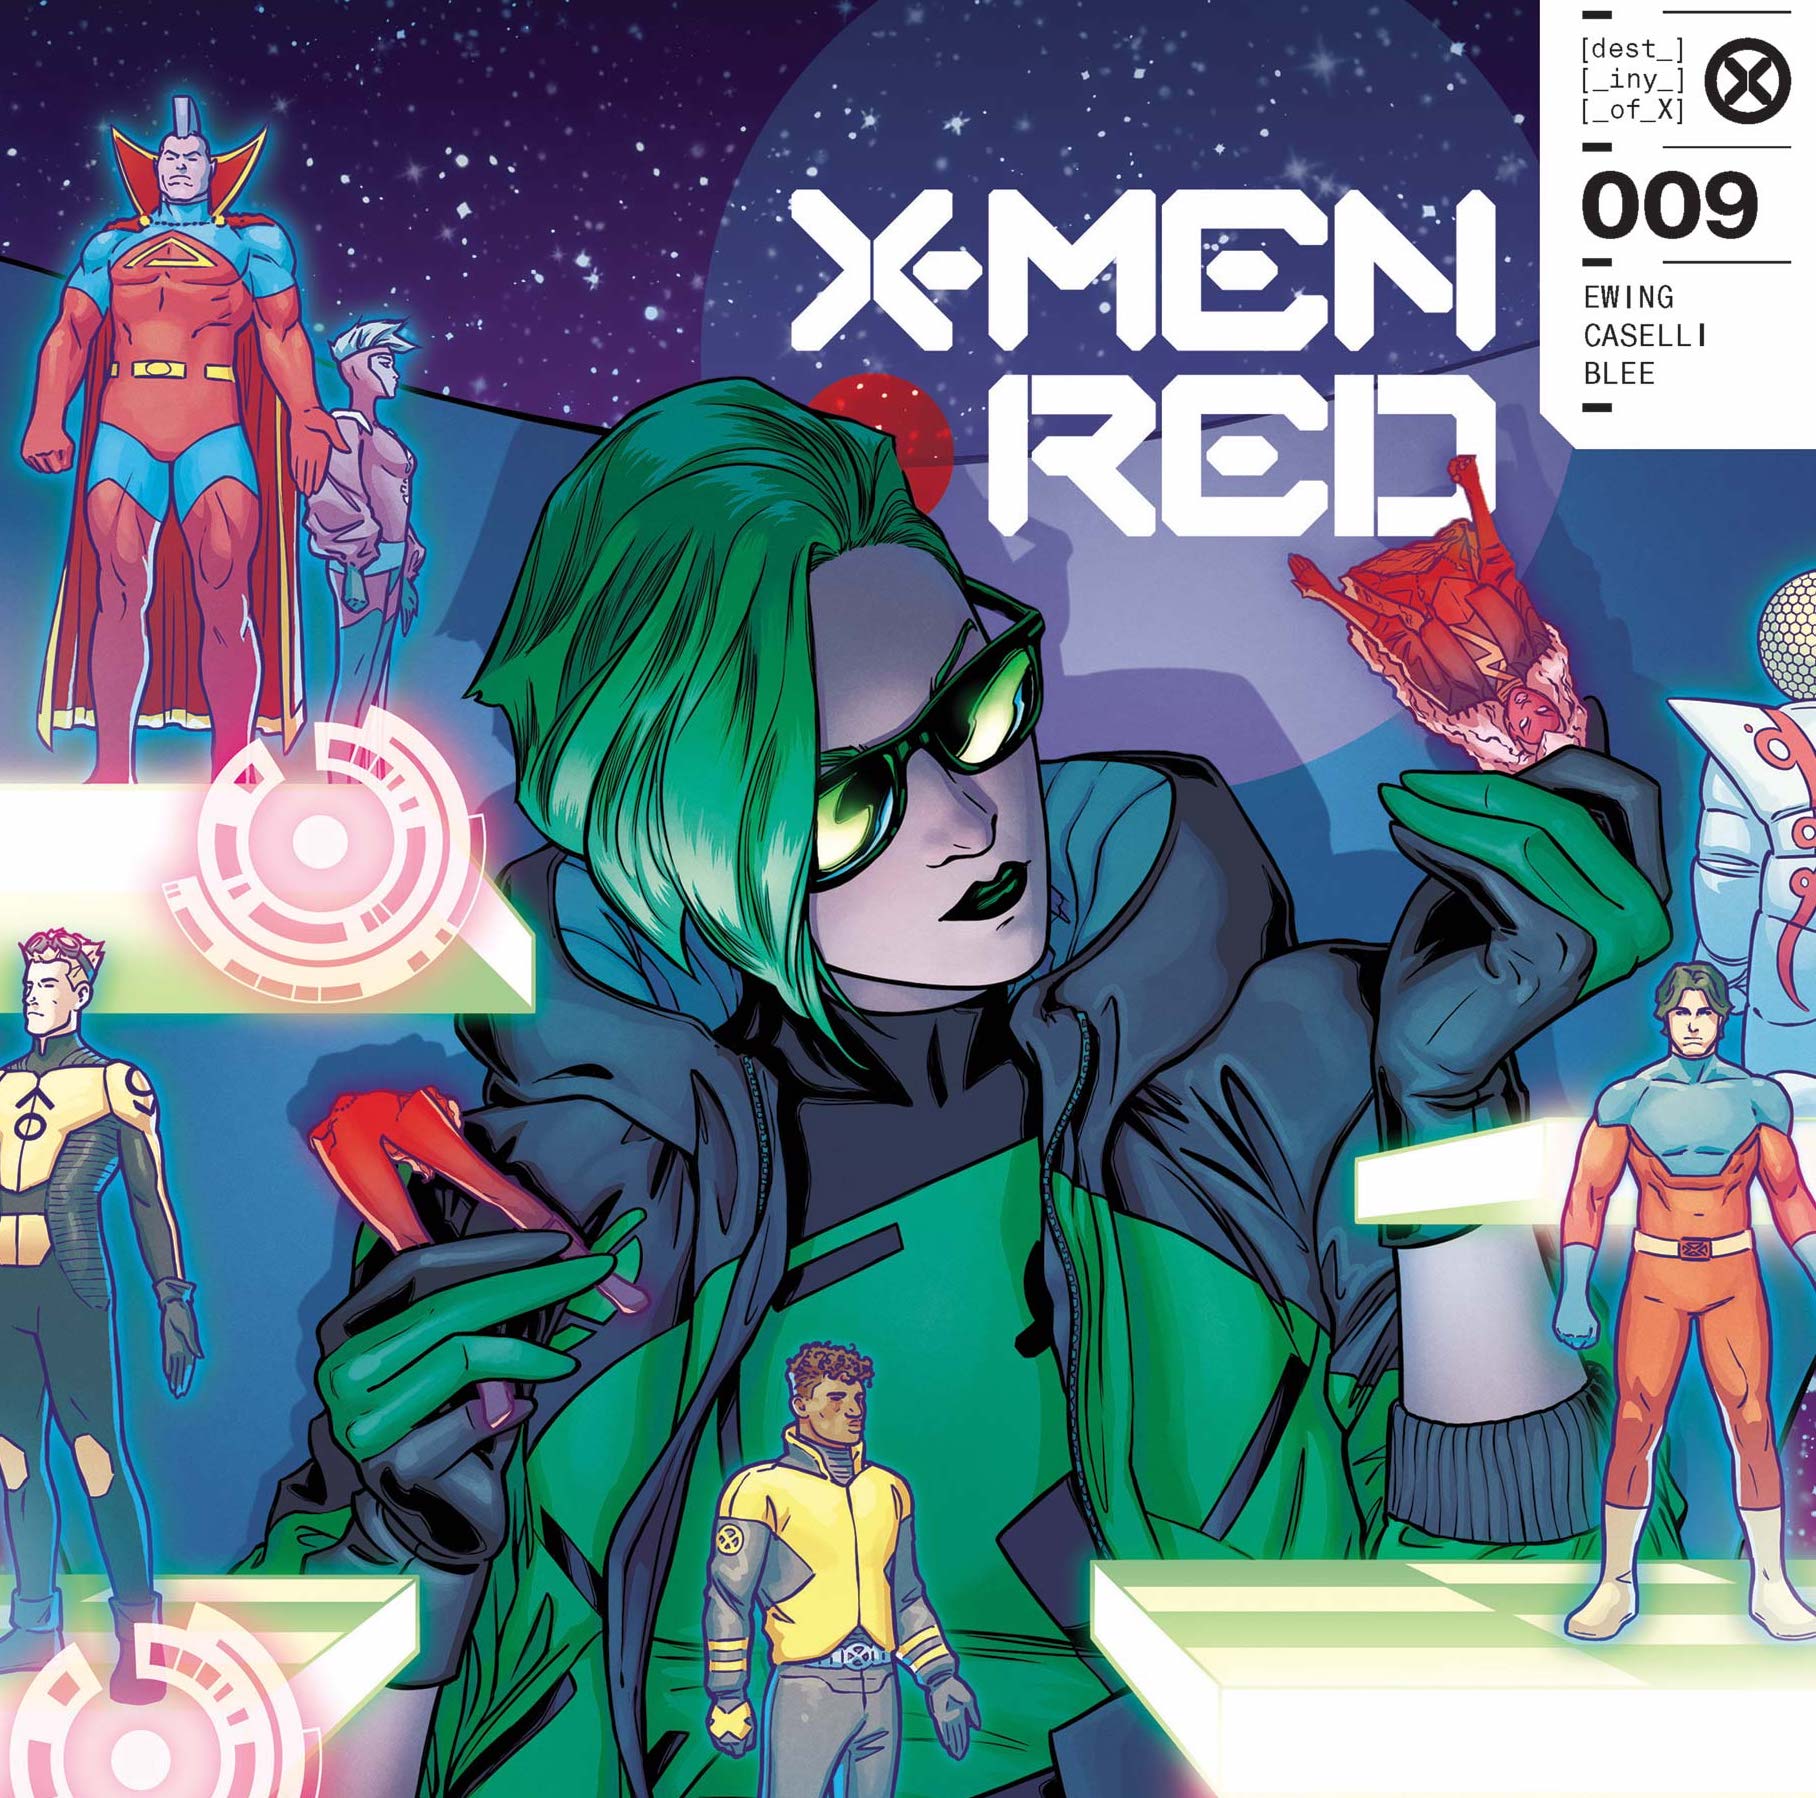 ‘X-Men: Red’ #9 reminds us Vulcan is very dangerous